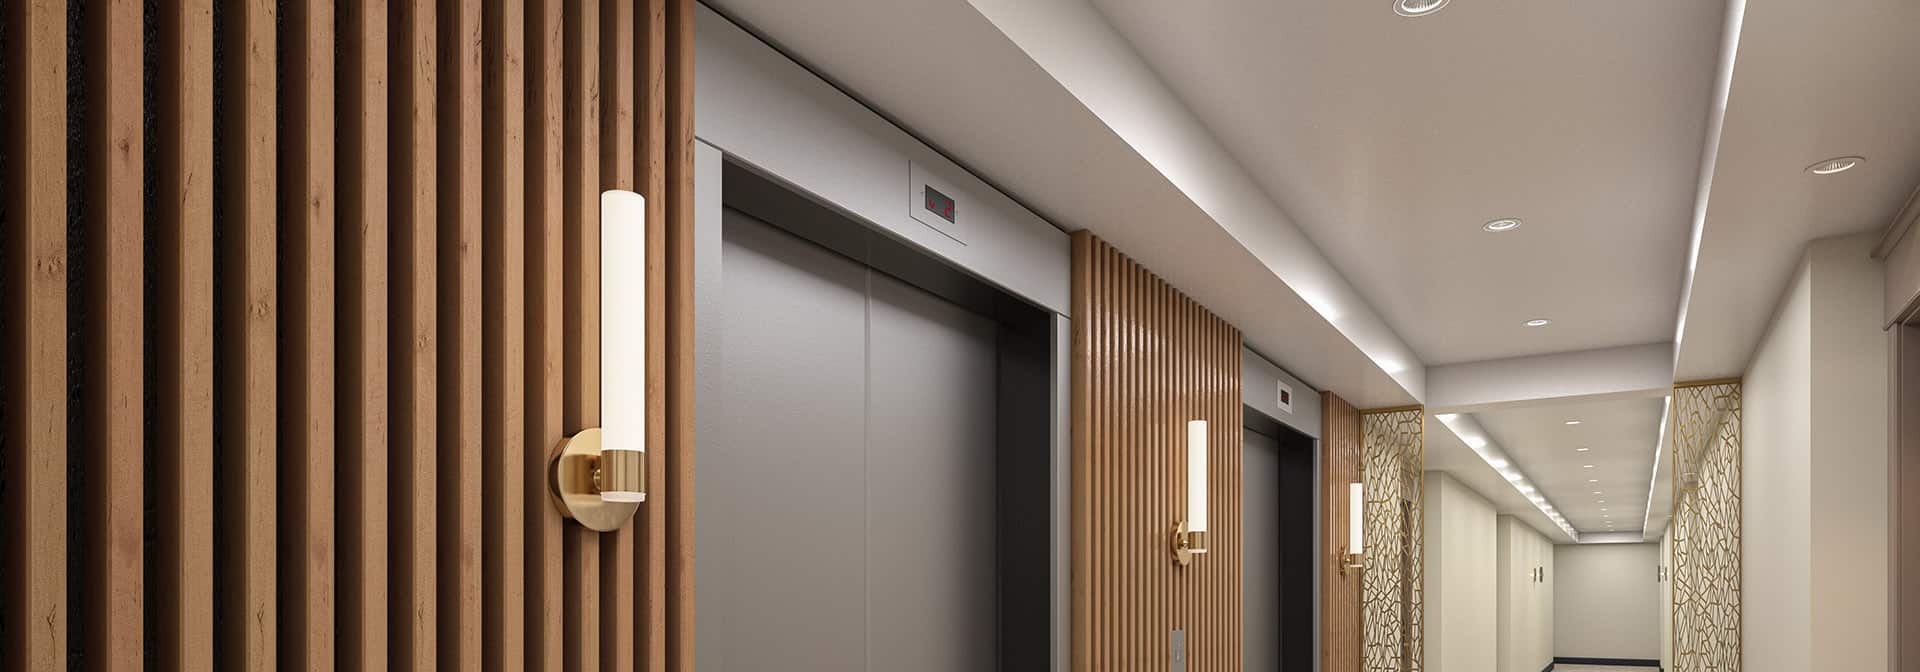 Interior 3d Visualization - Elevator